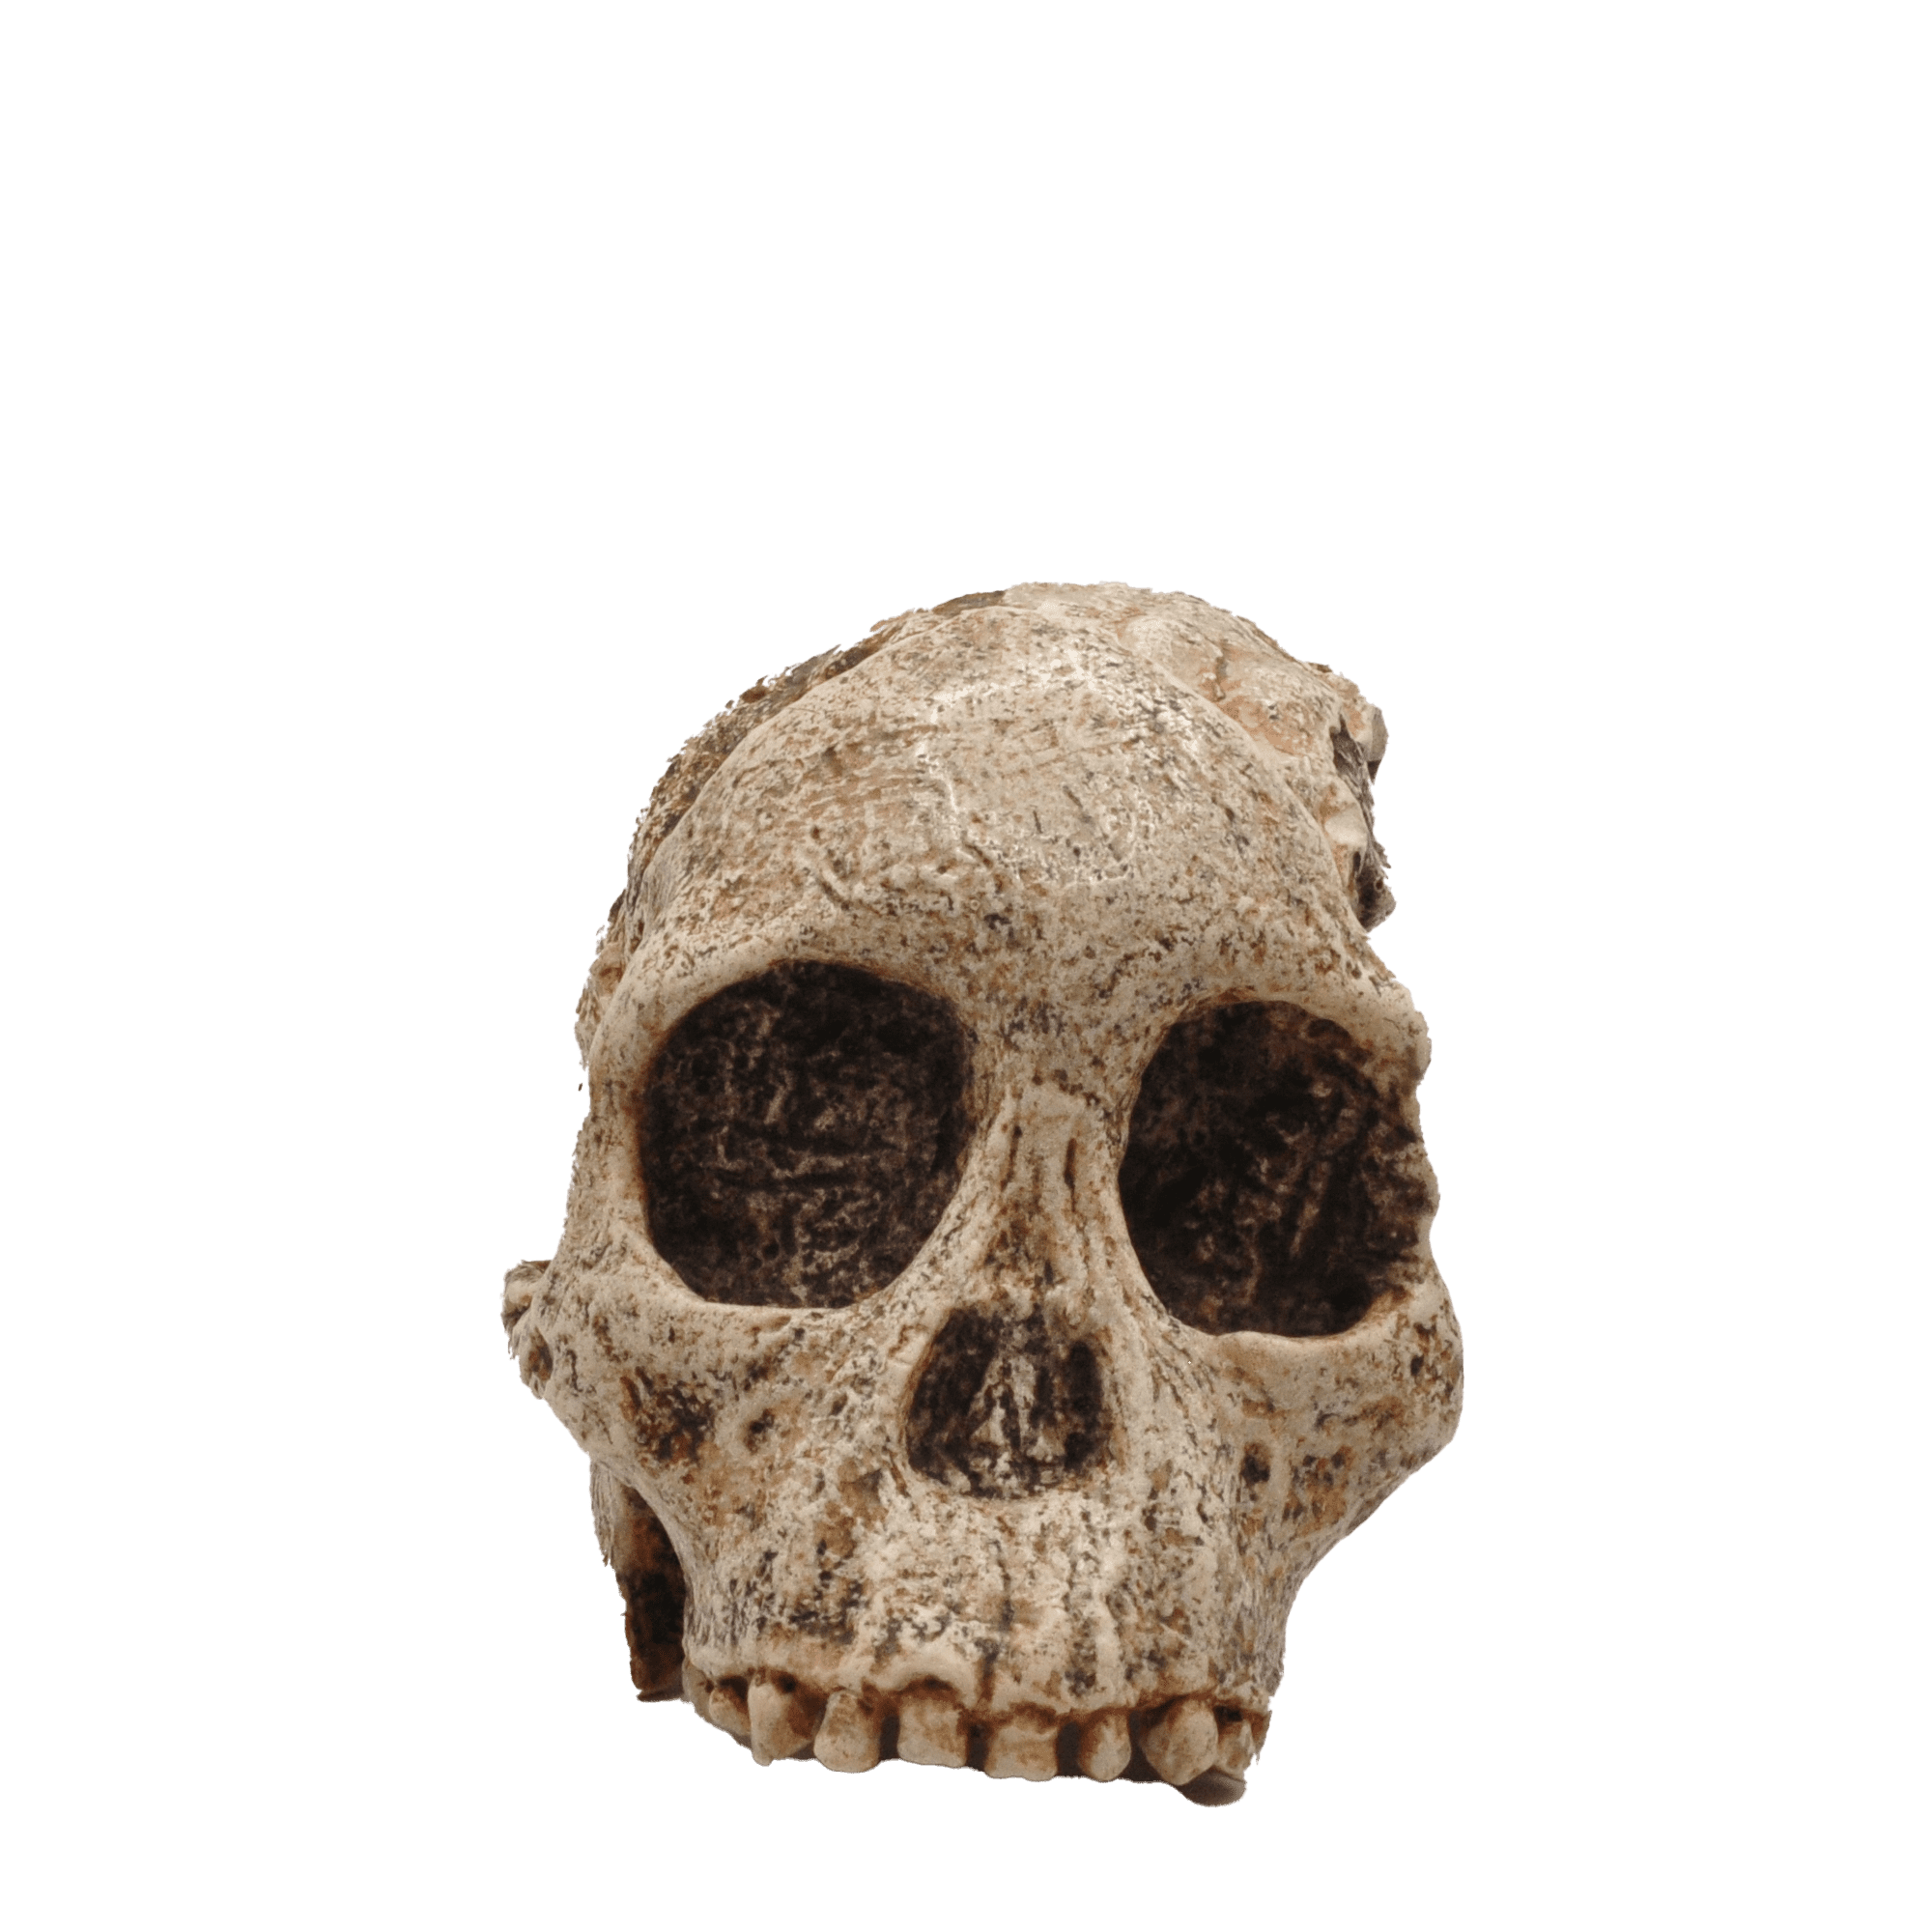 Skull of an Australopithecus - Australopithecus africanus